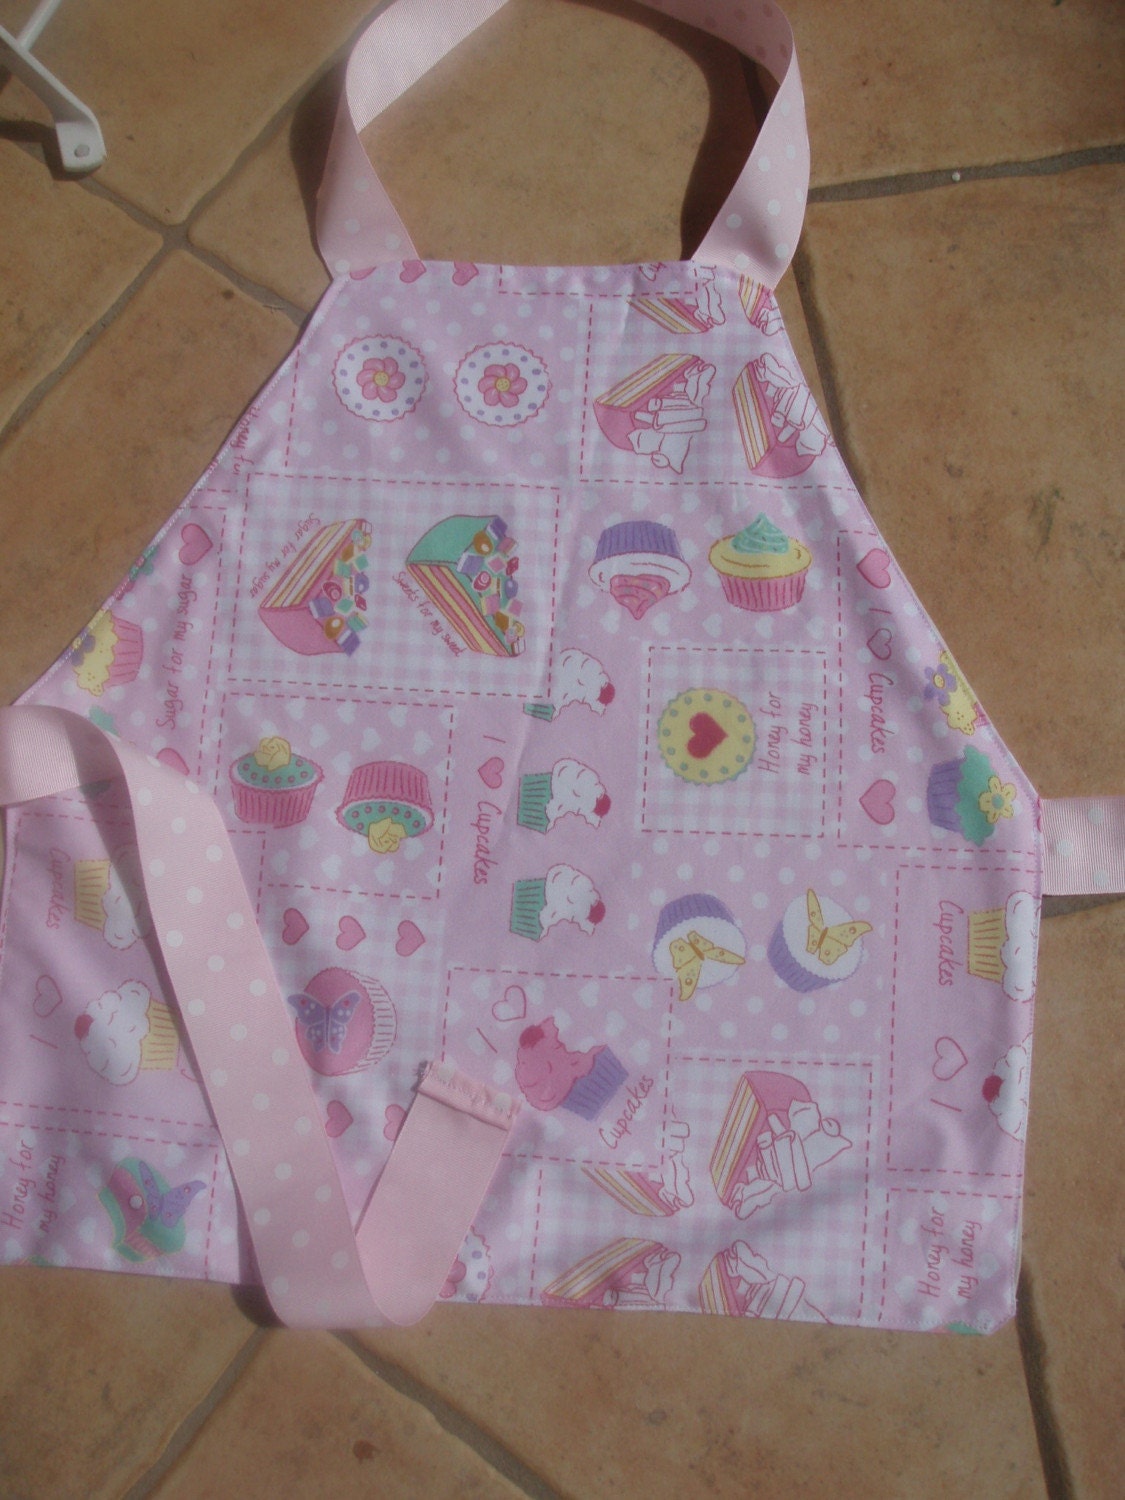 Cupcake child's apron - pink polka dots